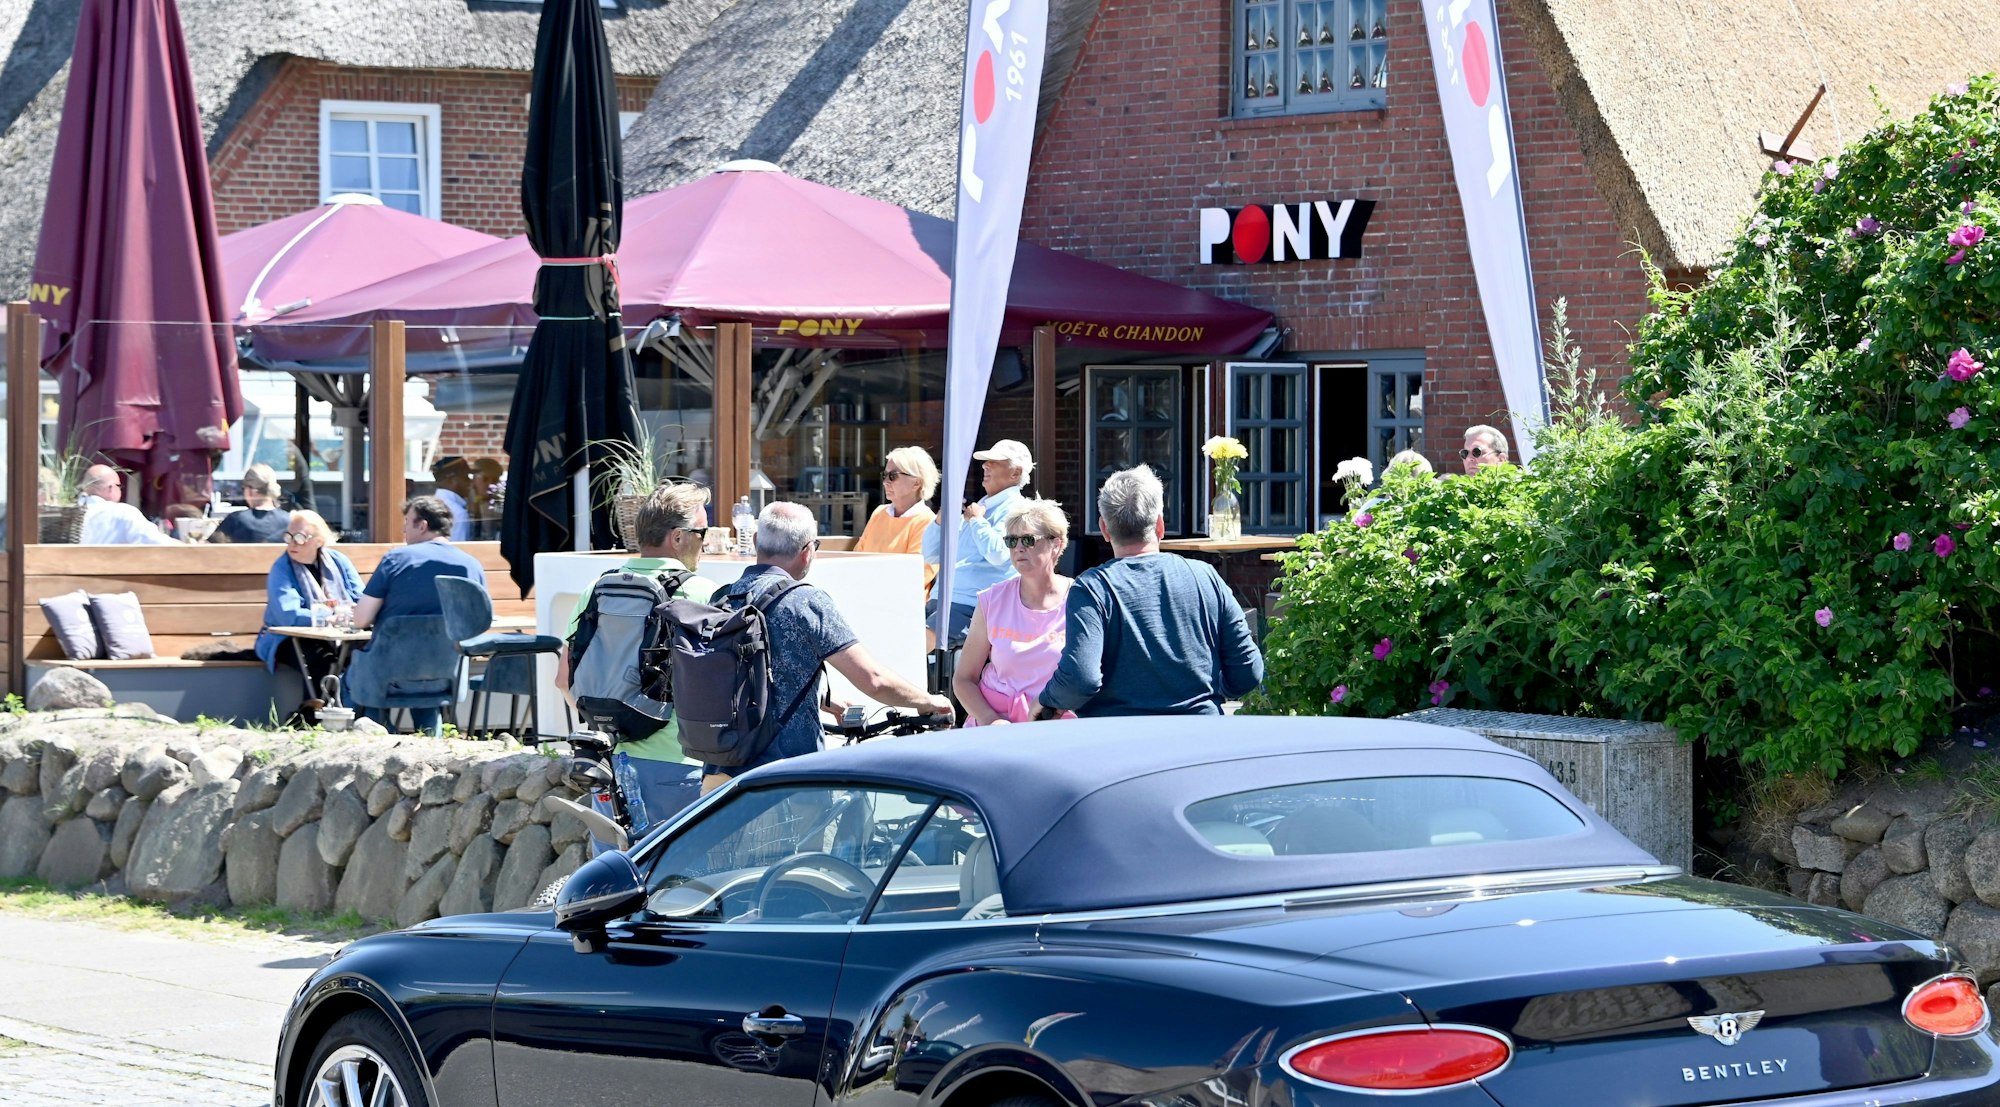 Das Restaurant "Pony" in Kampen. (Archivbild)